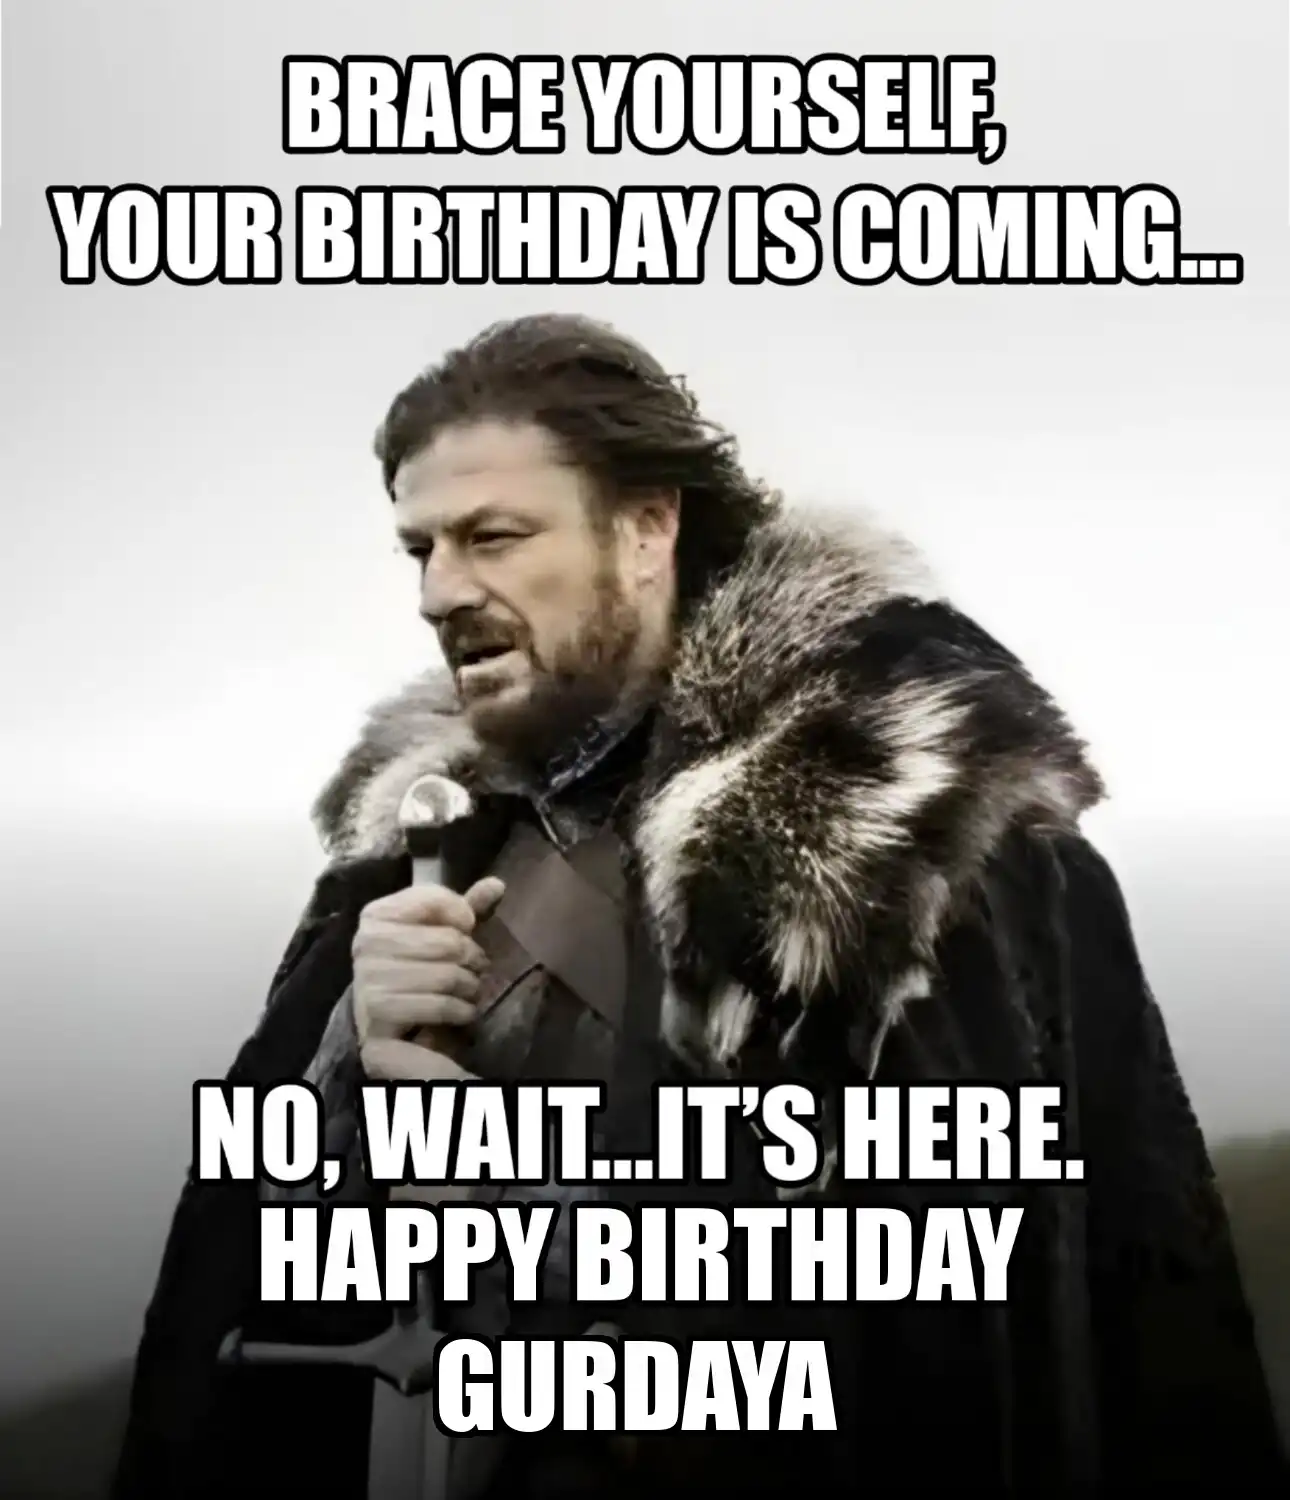 Happy Birthday Gurdaya Brace Yourself Your Birthday Is Coming Meme